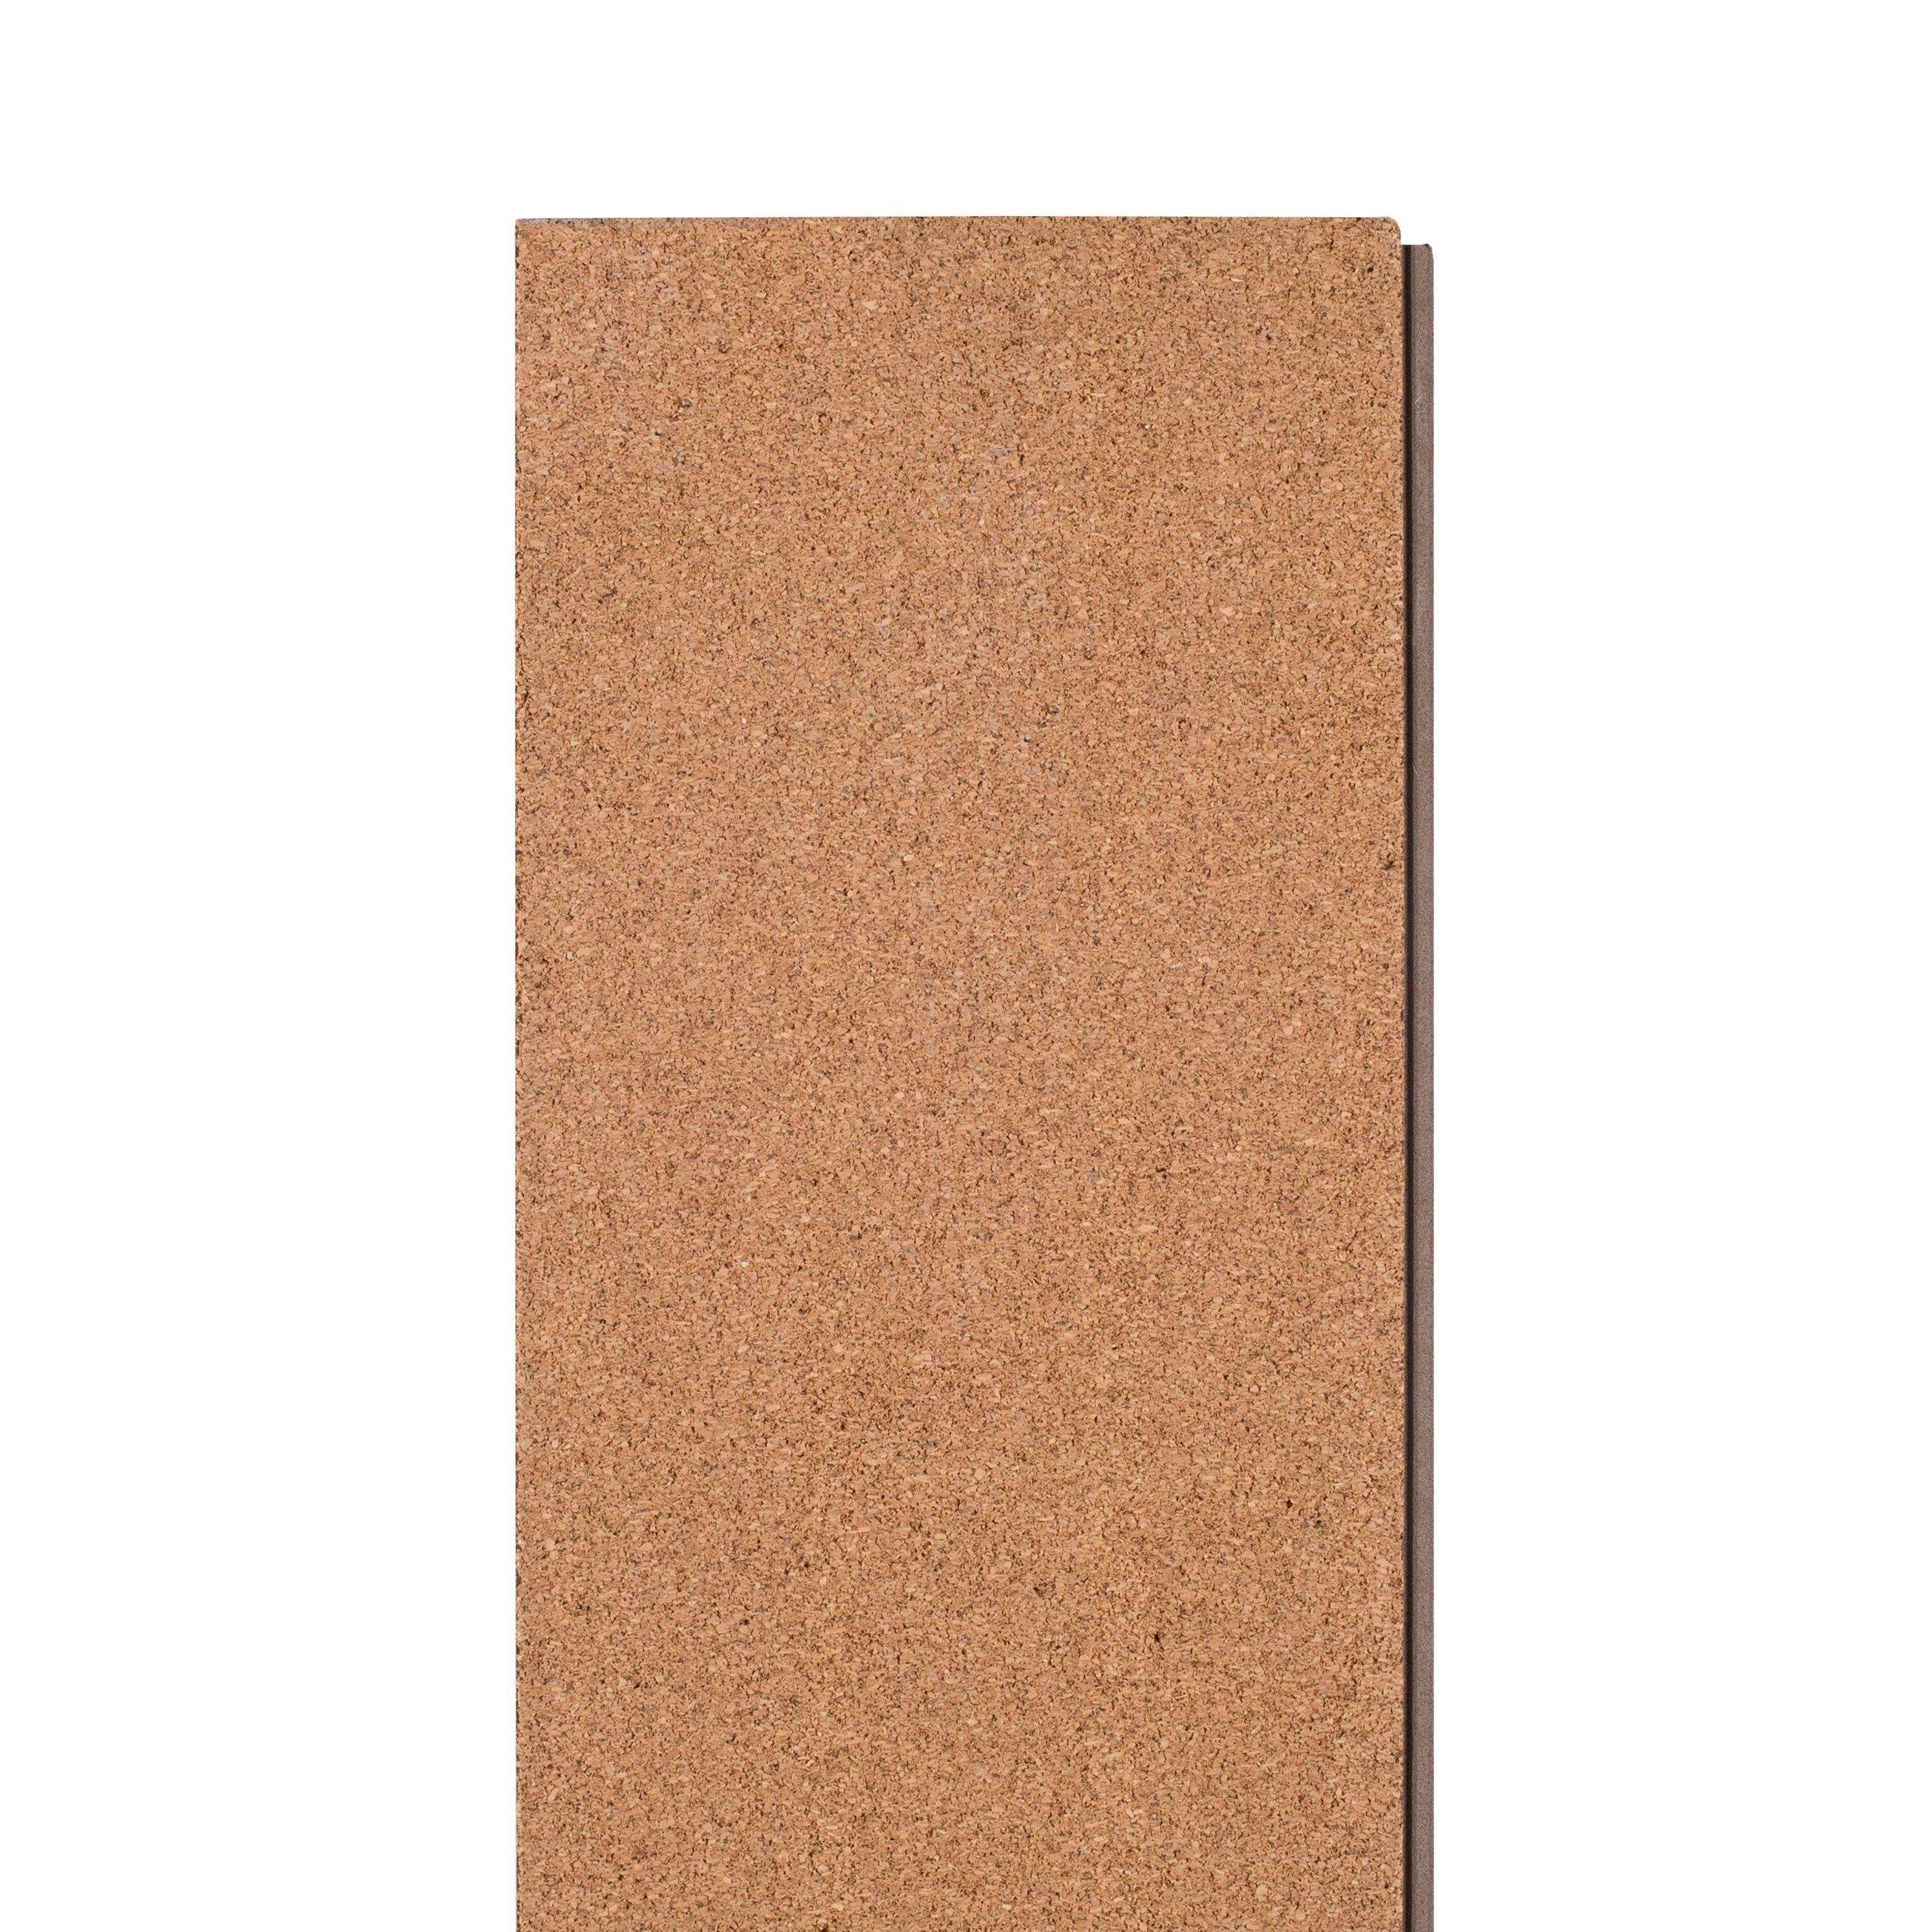 Acacia Rigid Core Luxury Vinyl Plank - Cork Back